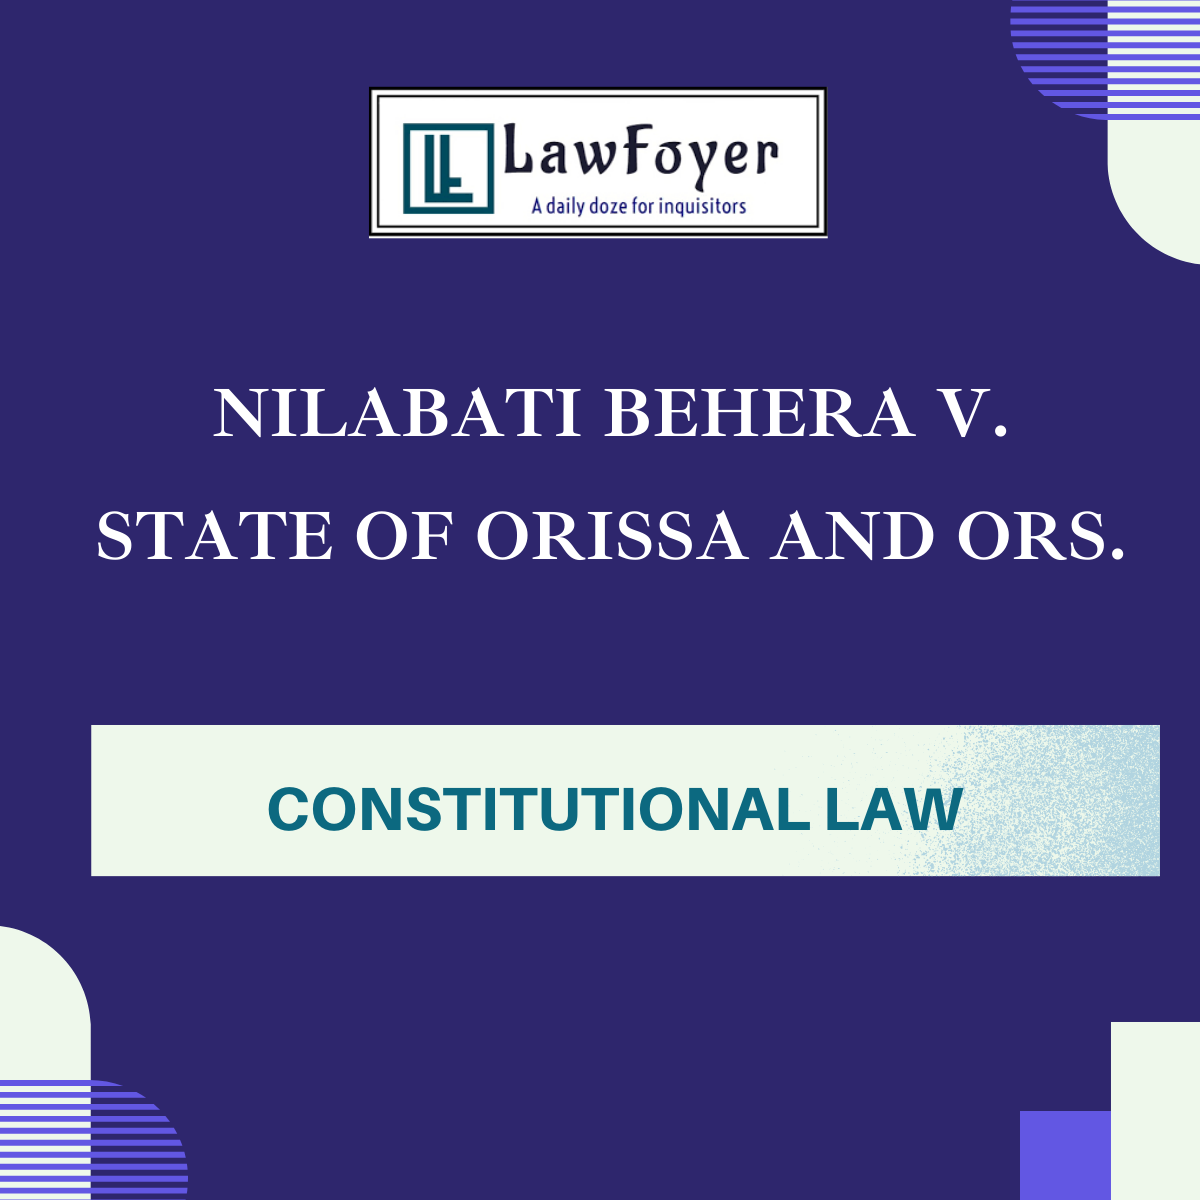 NILABATI BEHERA V. STATE OF ORISSA AND ORS.